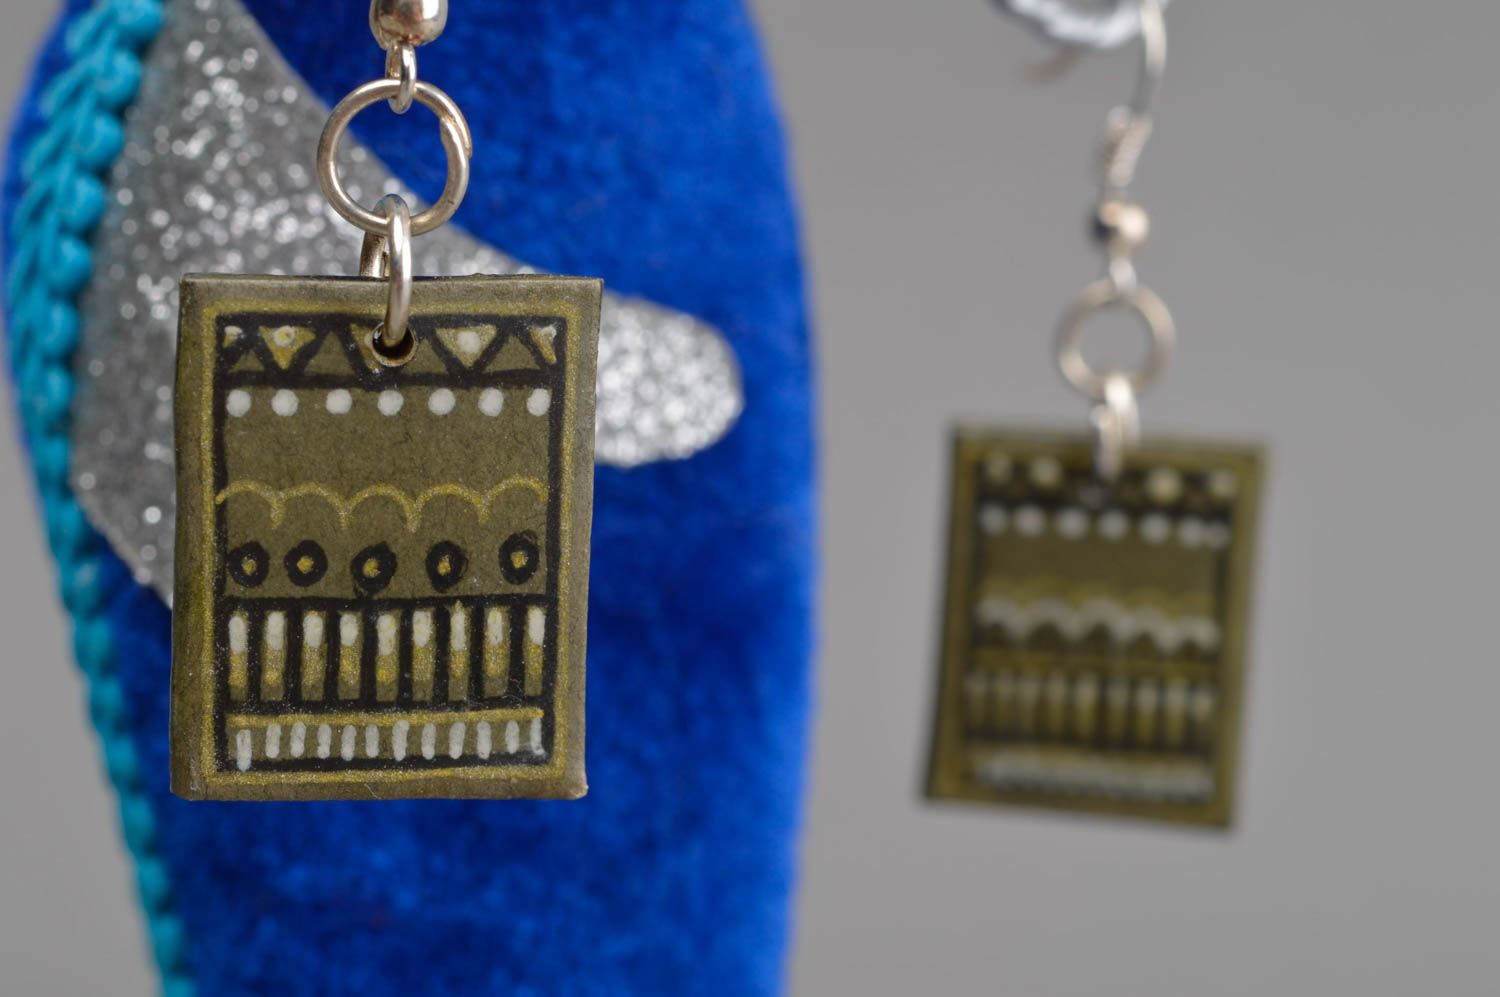 Unusual handmade epoxy earrings artisan jewelry designs fashion tips for girls photo 1